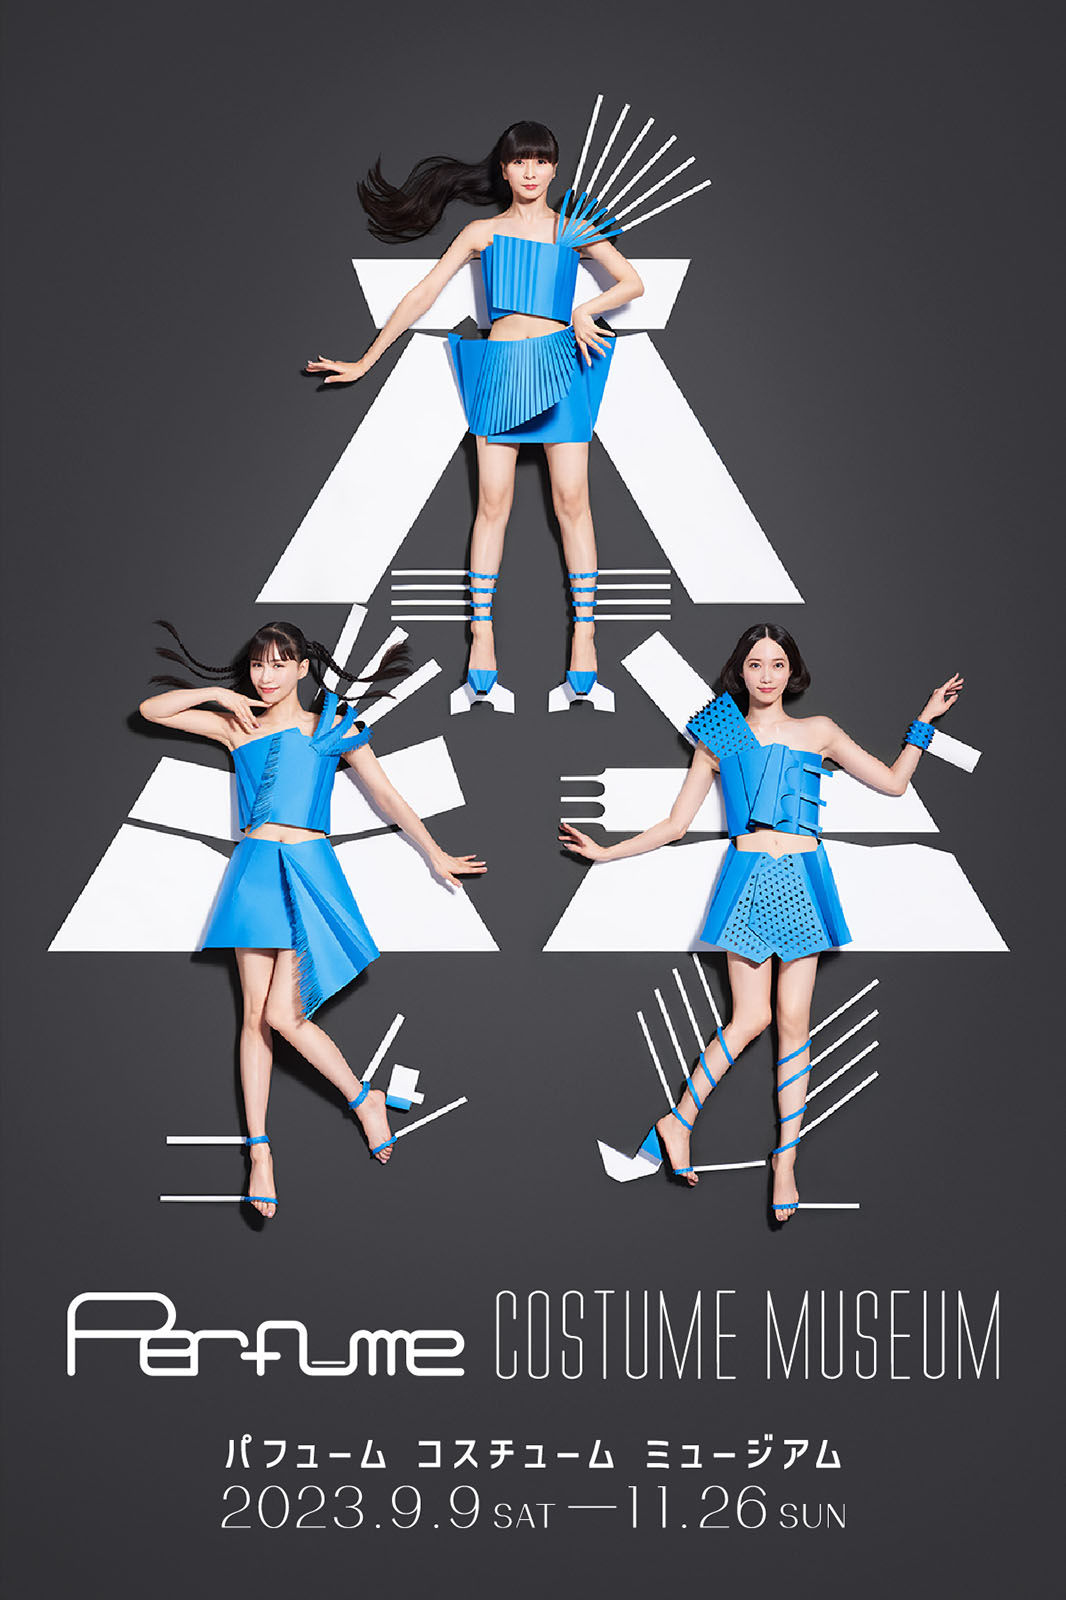 Perfume COSTUME MUSEUM。
パフューム コスチューム ミュージアム。会期は2023年9月9日（土曜日）? 11月26日（日曜日）。